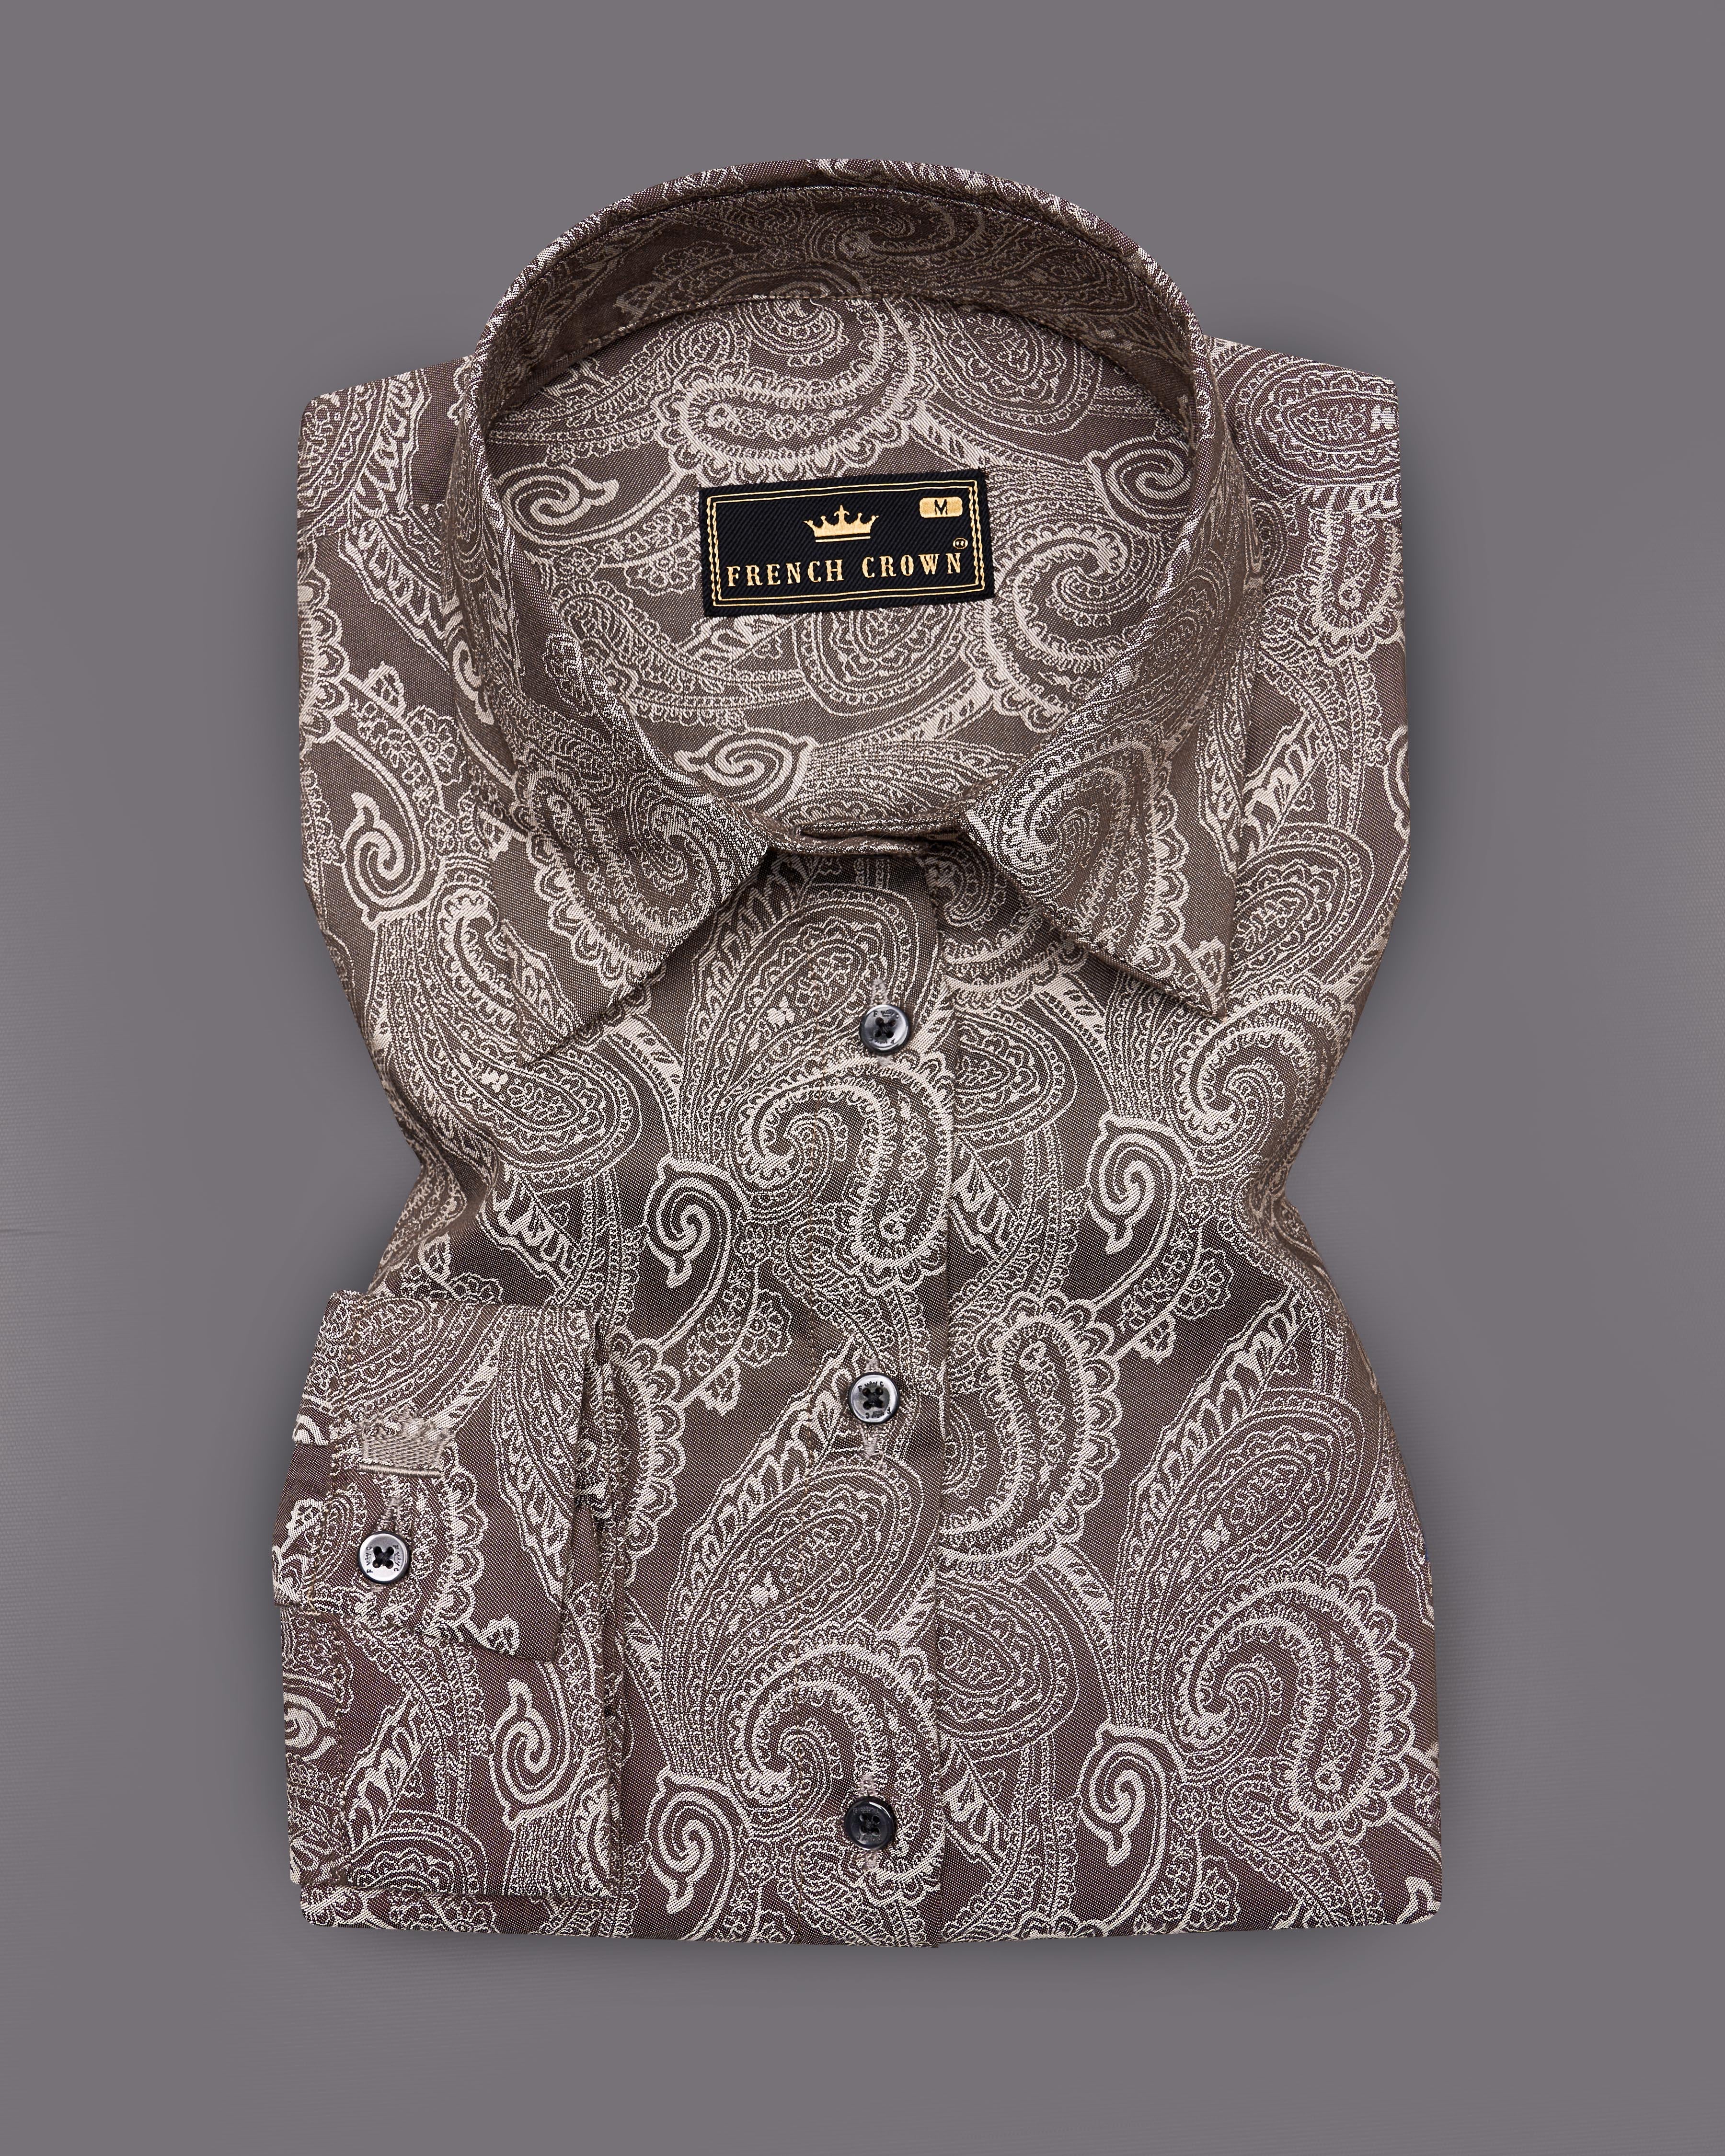 Wenge Brown with Turkey Cream Paisley Printed Premium Cotton Shirt WS001-BLK-32, WS001-BLK-34, WS001-BLK-36, WS001-BLK-38, WS001-BLK-40, WS001-BLK-42